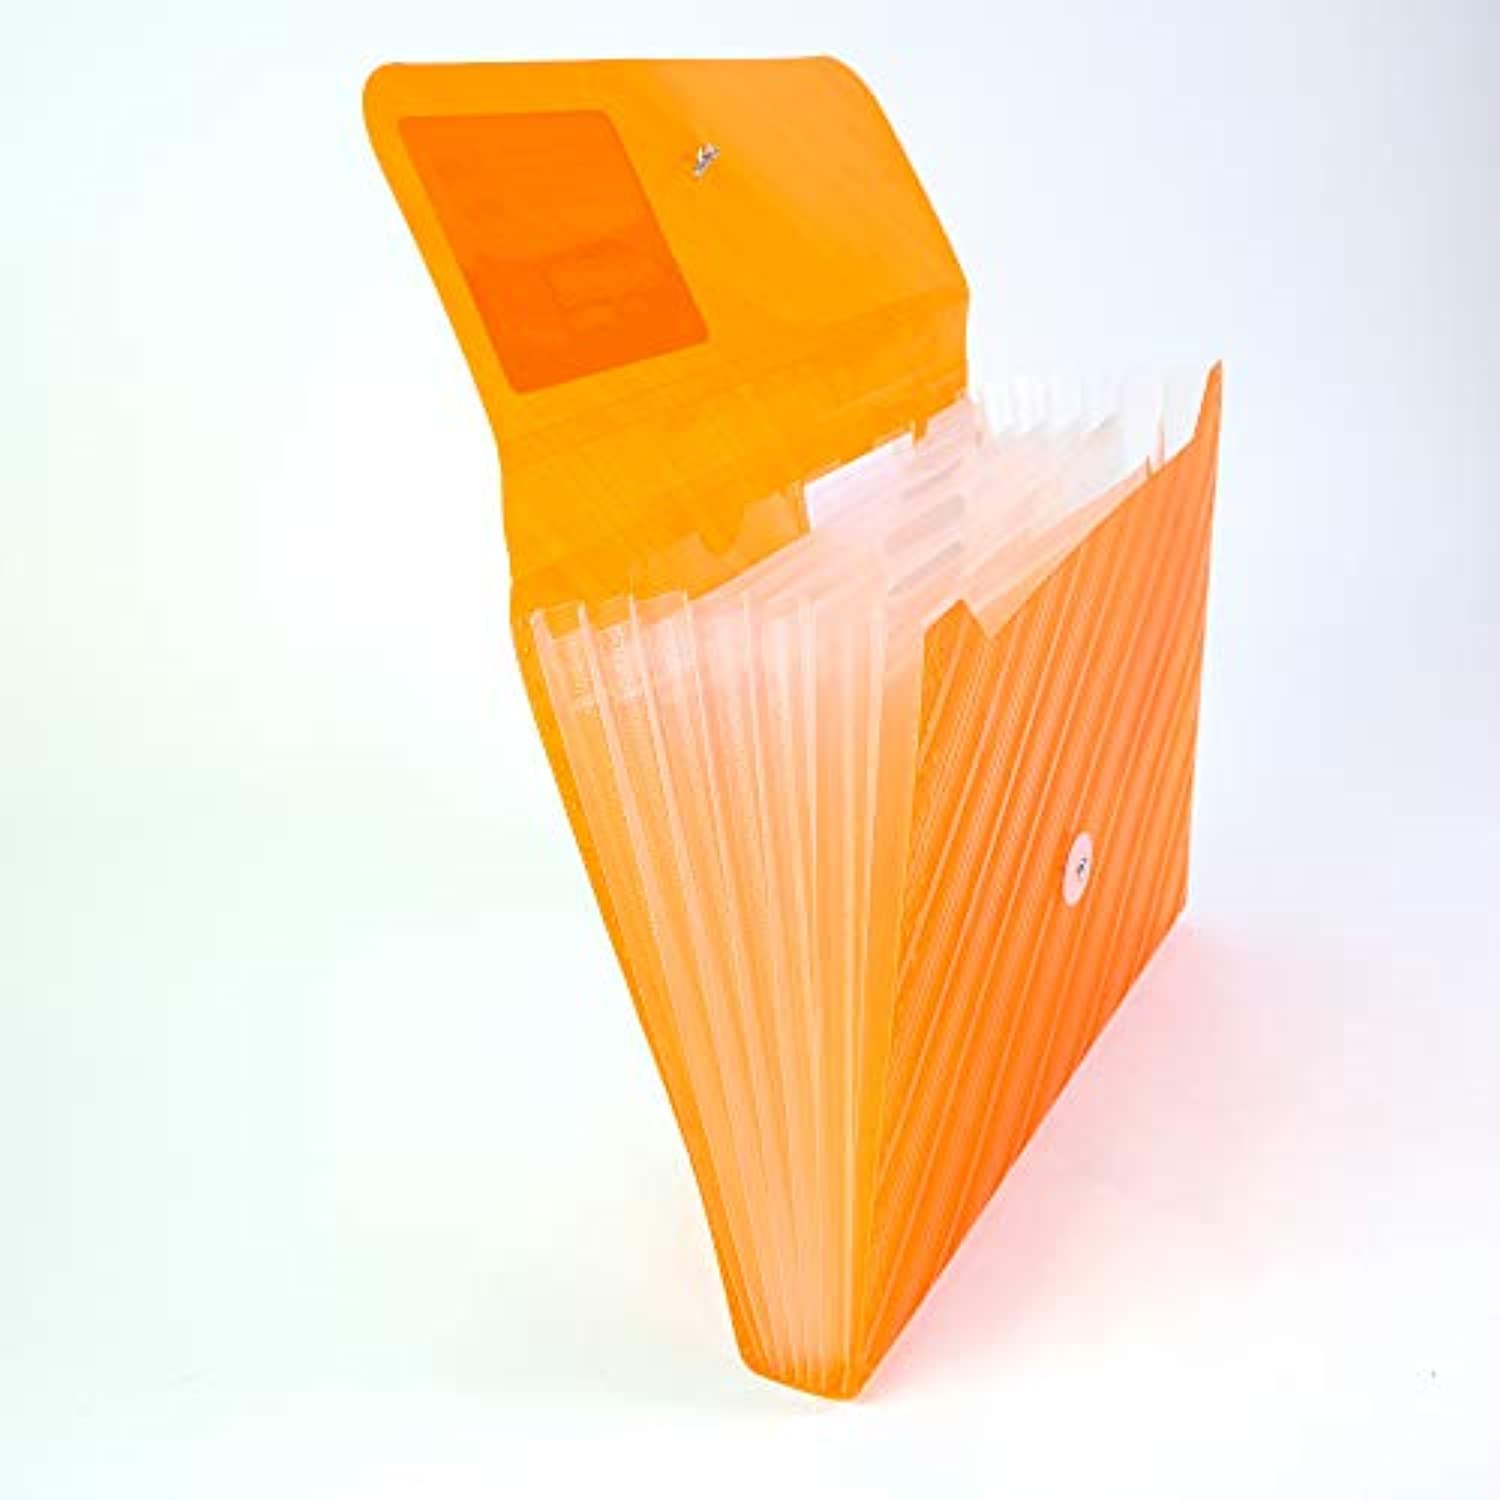 BAZIC Translucent 7 Pocket Divider Letter Size Poly Expanding File, Document Holder Files Wallet Plastic Envelope Folders, Elastic Band Closure, Office Home Organize - Assorted Color, 12-Pack.